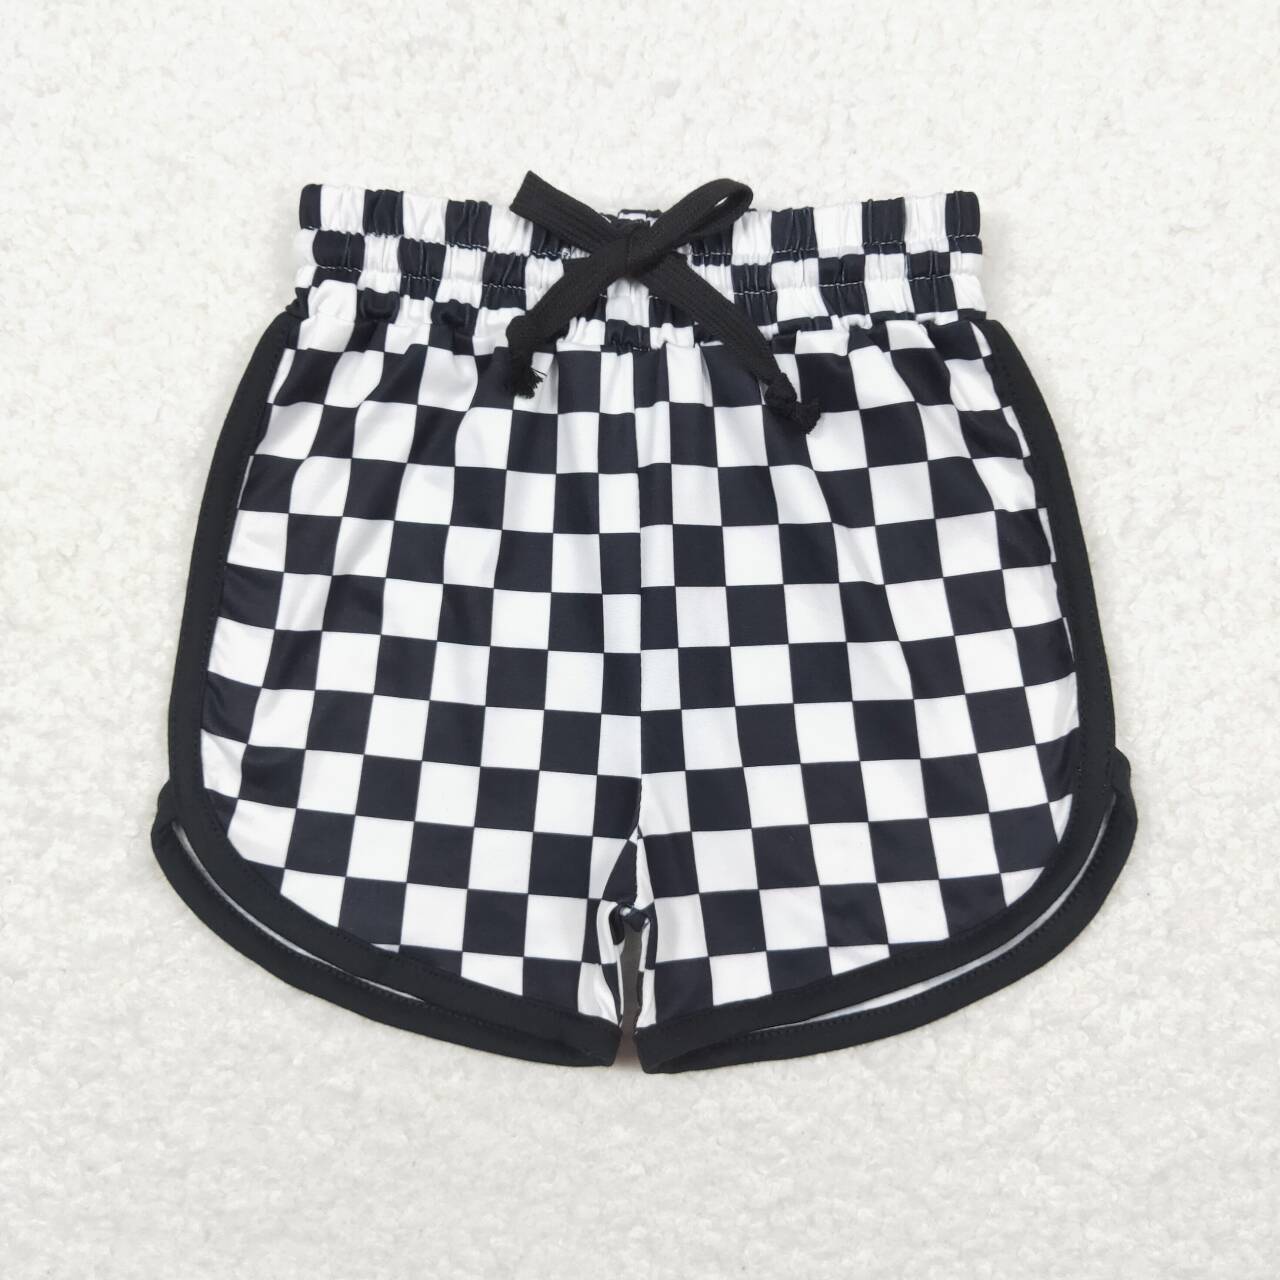 Adult women black checkered shorts